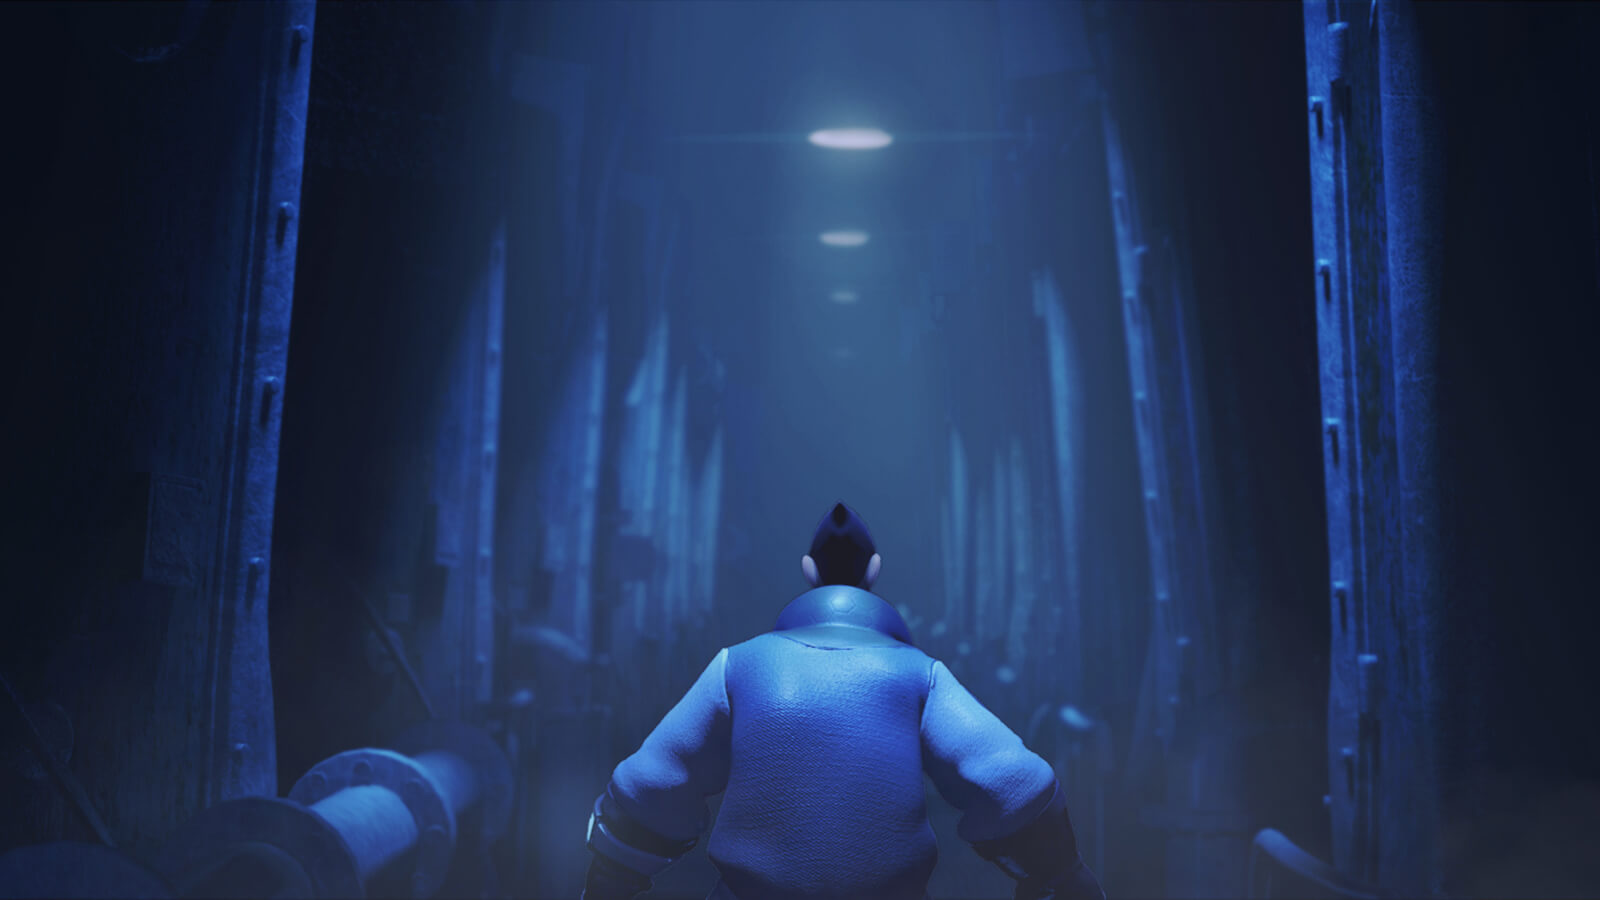 Vista posterior de un hombre vestido de azul que camina un pasillo de un área industrial pobremente iluminada por arriba.